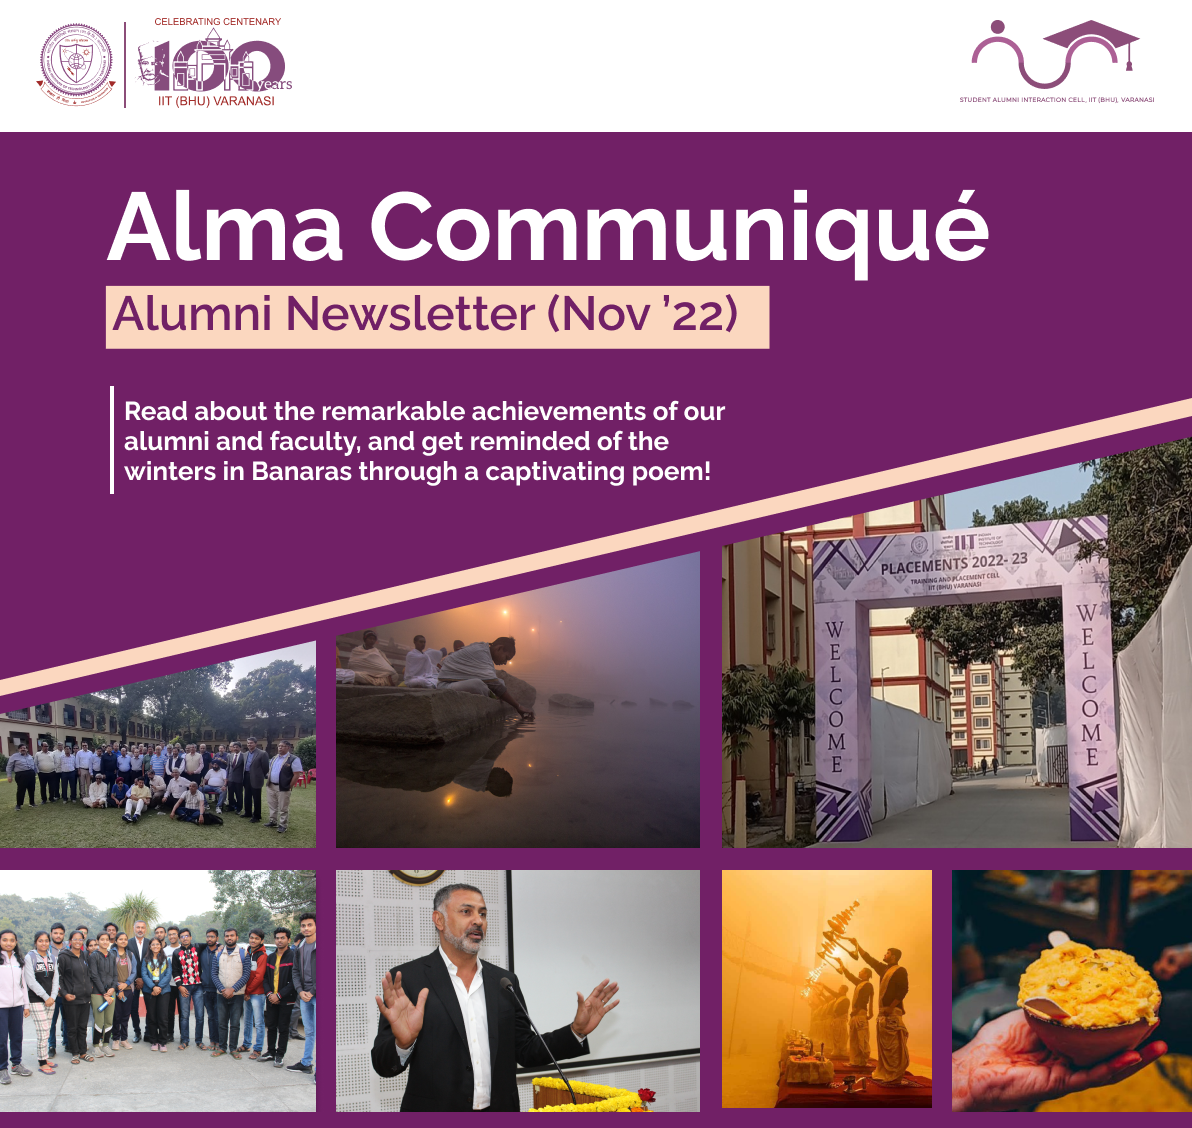 Alma Communiqué Nov. '22